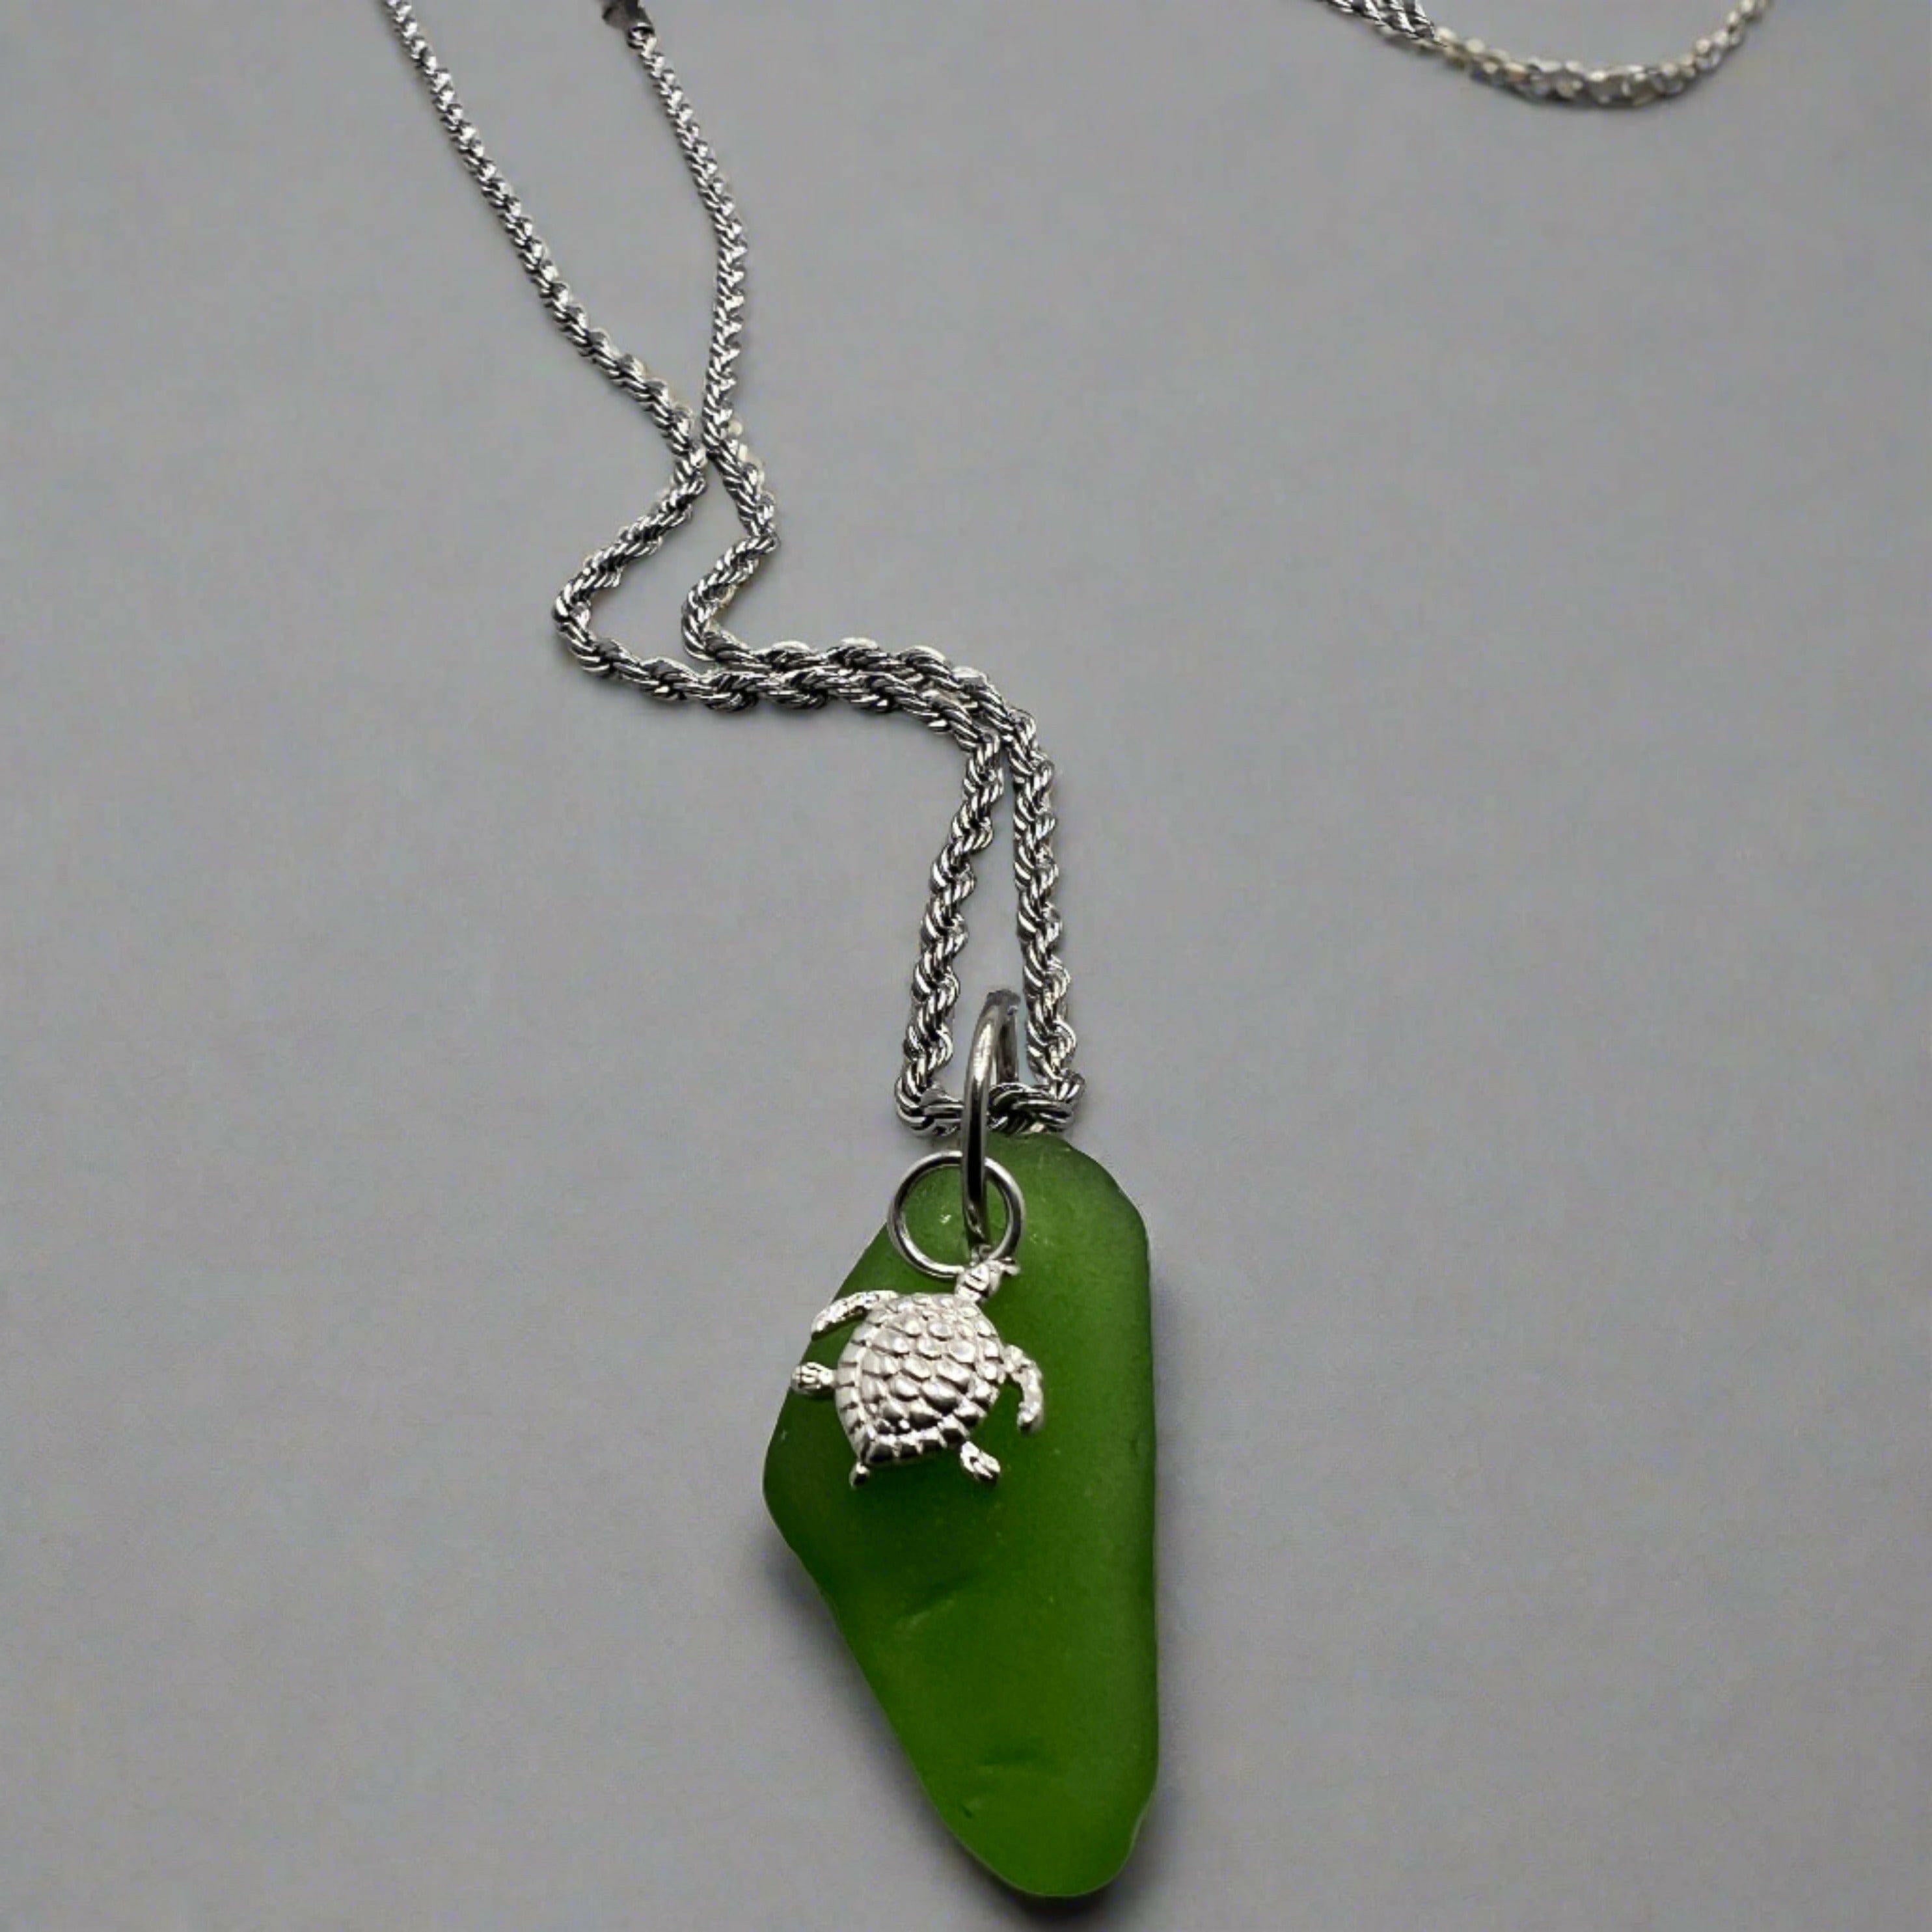 Sea Glass Turtle Necklace - Stylish Pendant, Elegant Chain Jewelry for Women